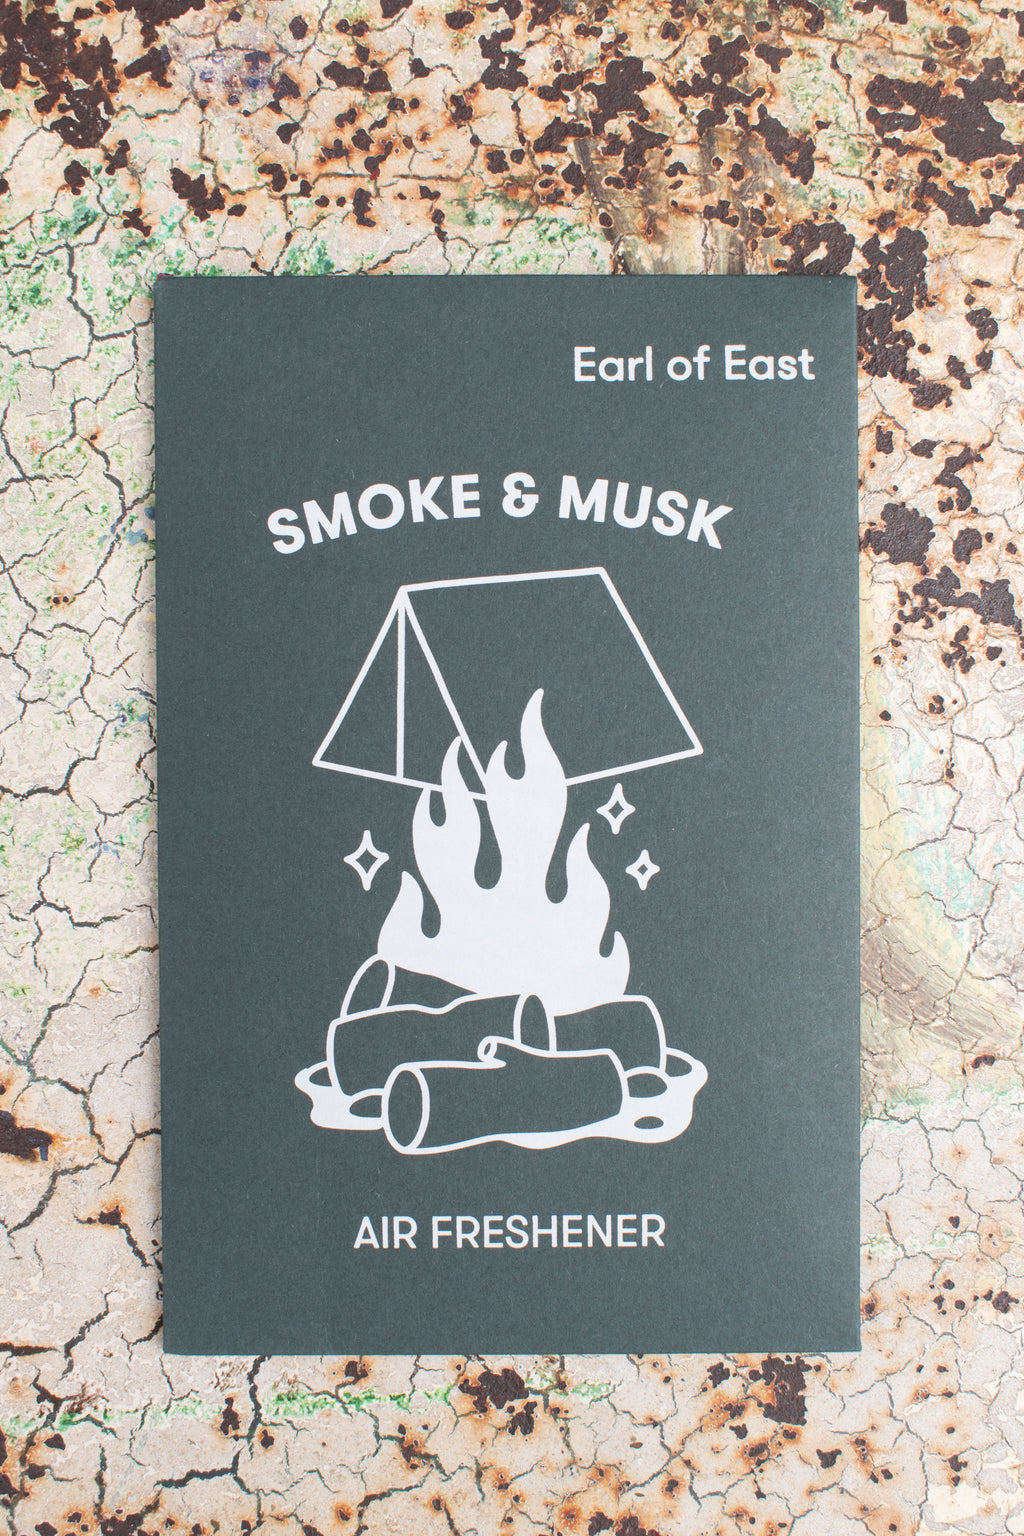 Earl of East Smoke & Musk Air Freshener - The Mercantile London